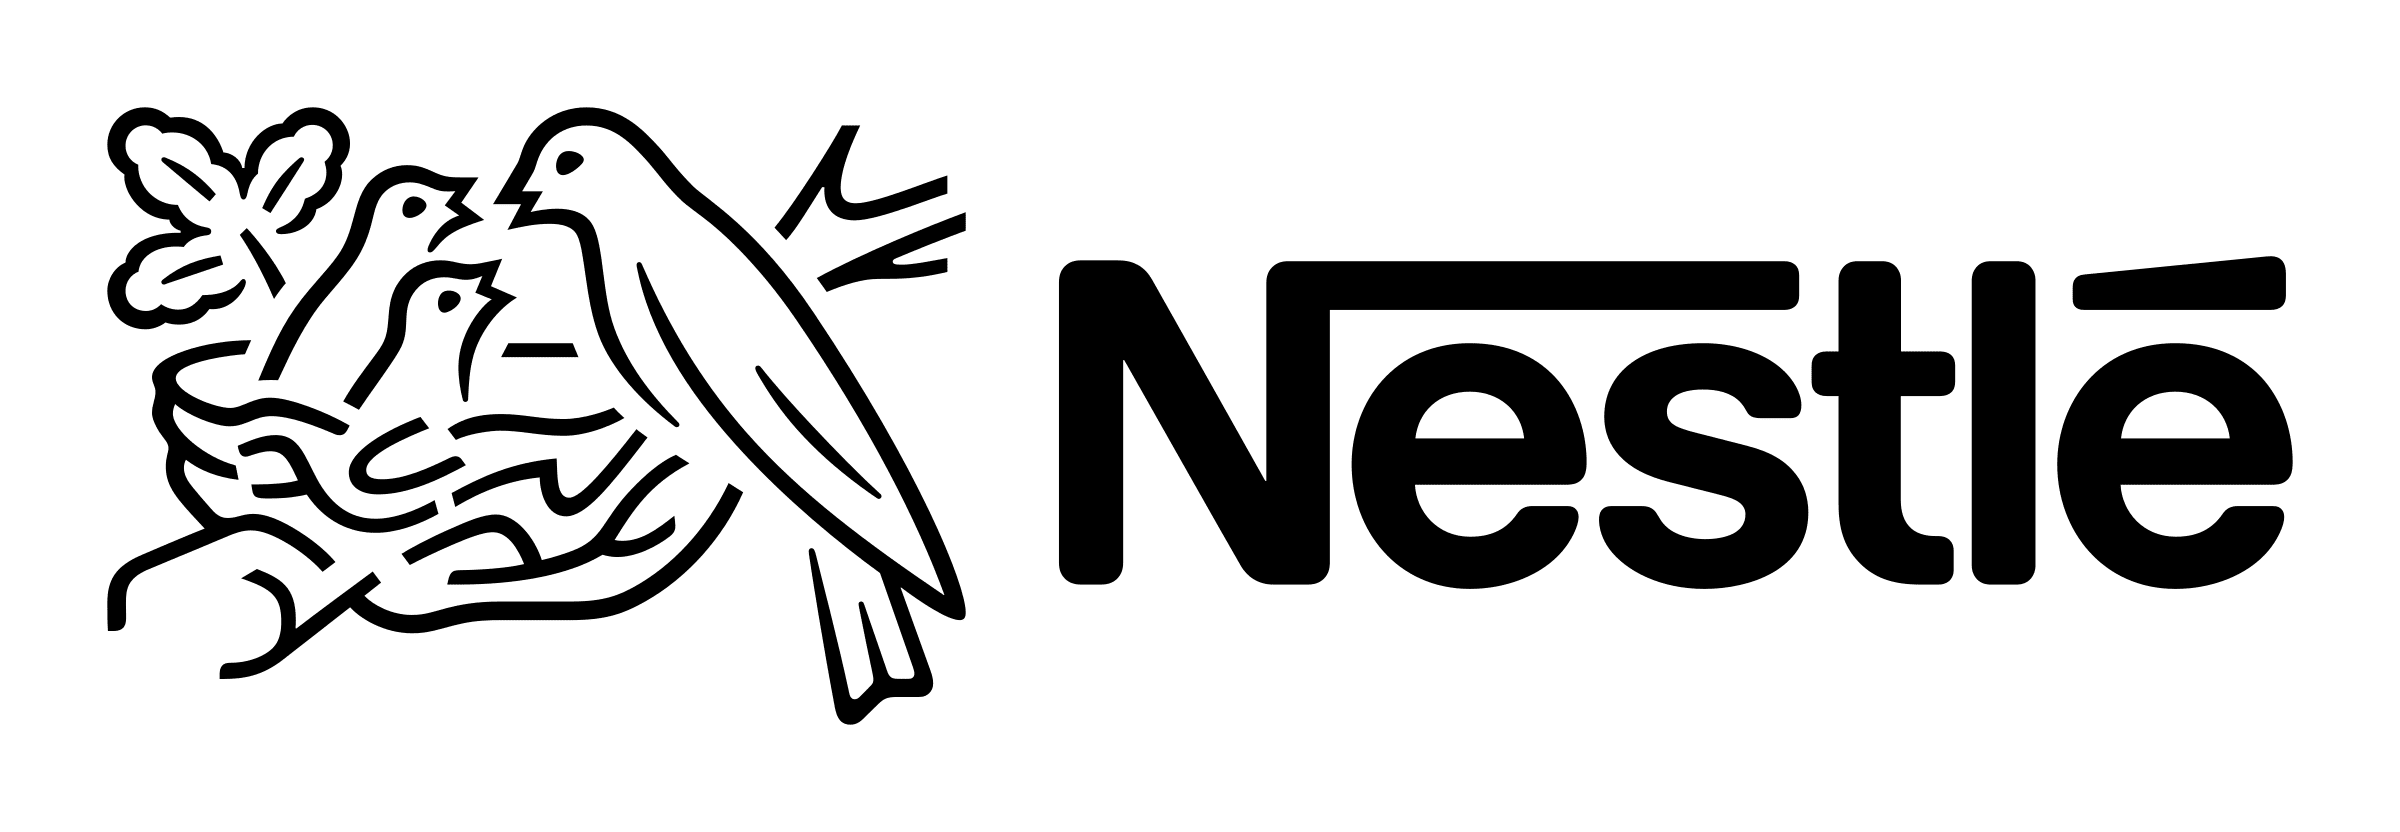 nestle-logo-black-and-white